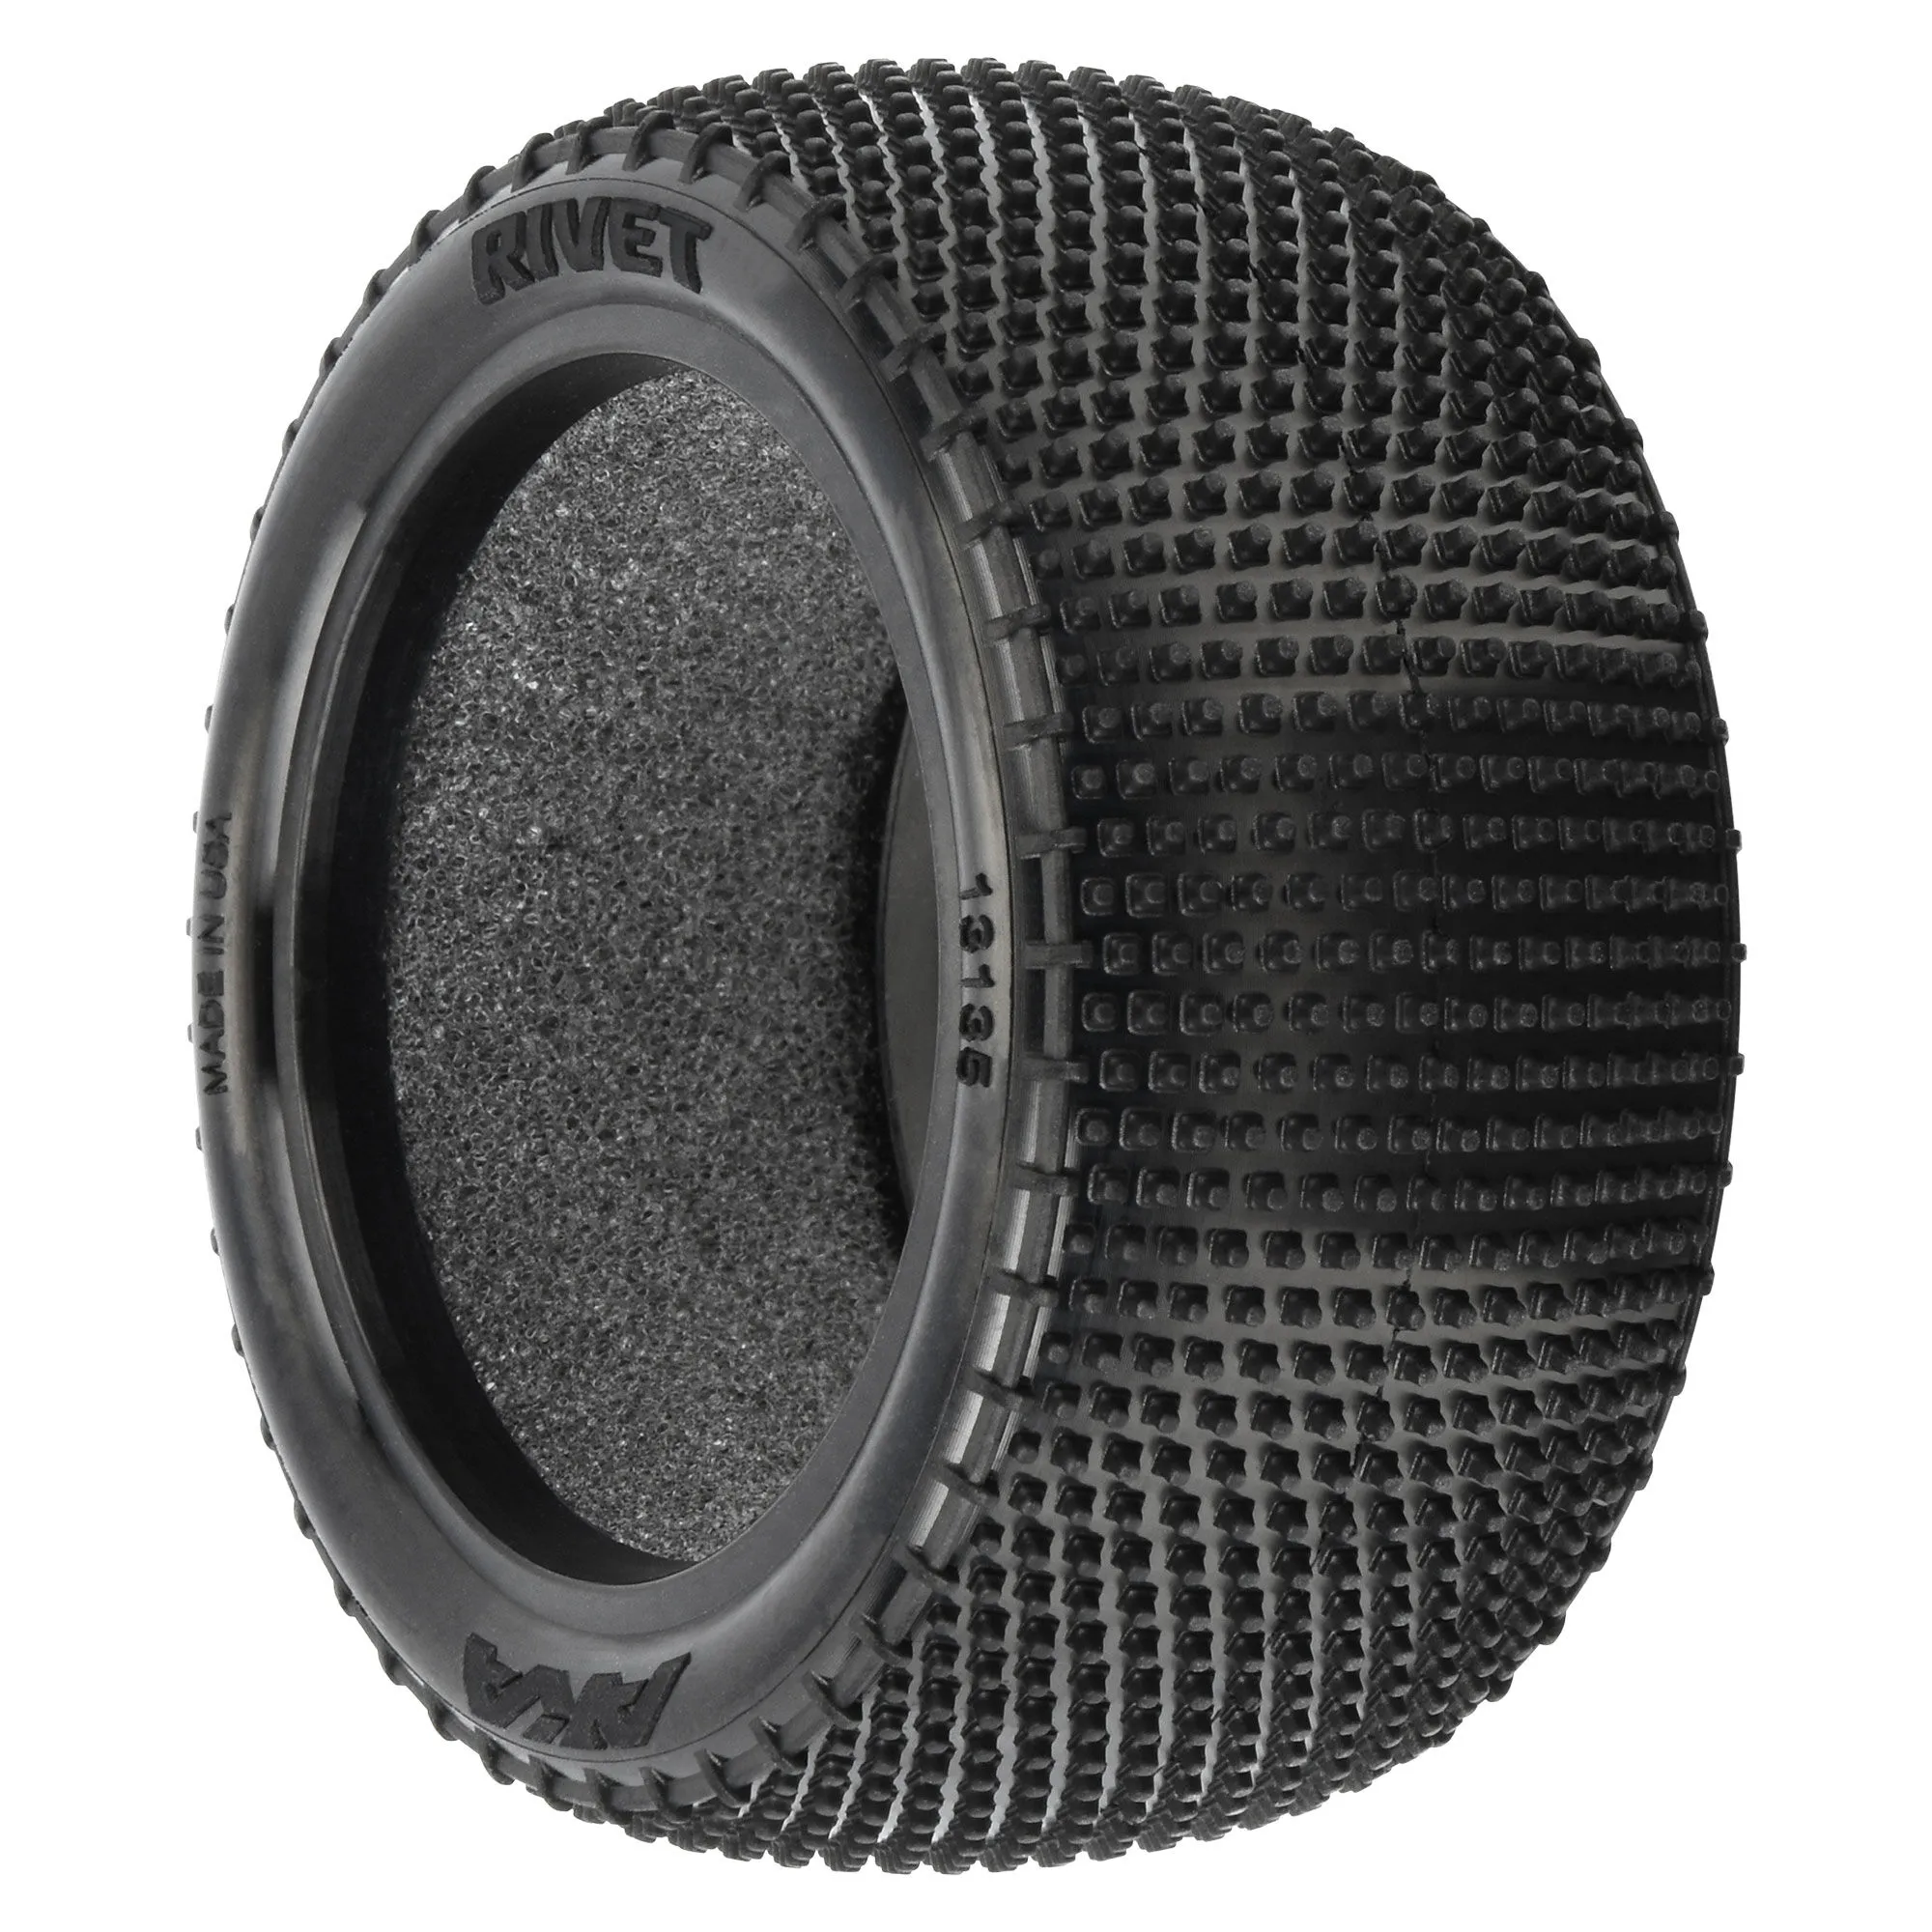 AKA 1/10 Rivet Soft Carpet Rear Off-Road Buggy Tires , 2pcs